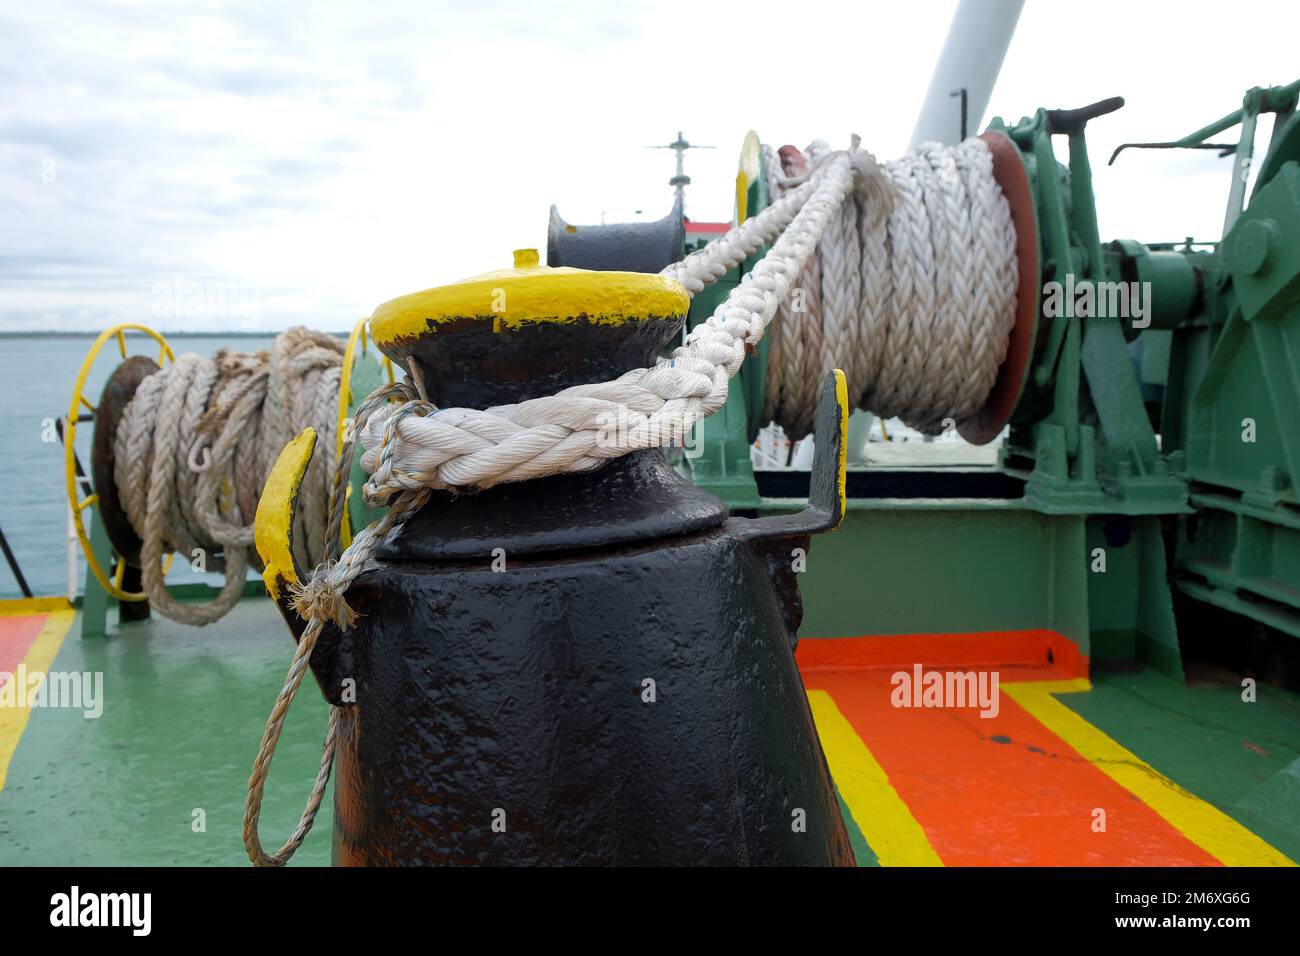 https://c8.alamy.com/comp/2M6XG6G/mooring-crane-ropes-on-marine-boat-drums-deck-mooring-mechanism-at-the-fore-of-the-tanker-2M6XG6G.jpg